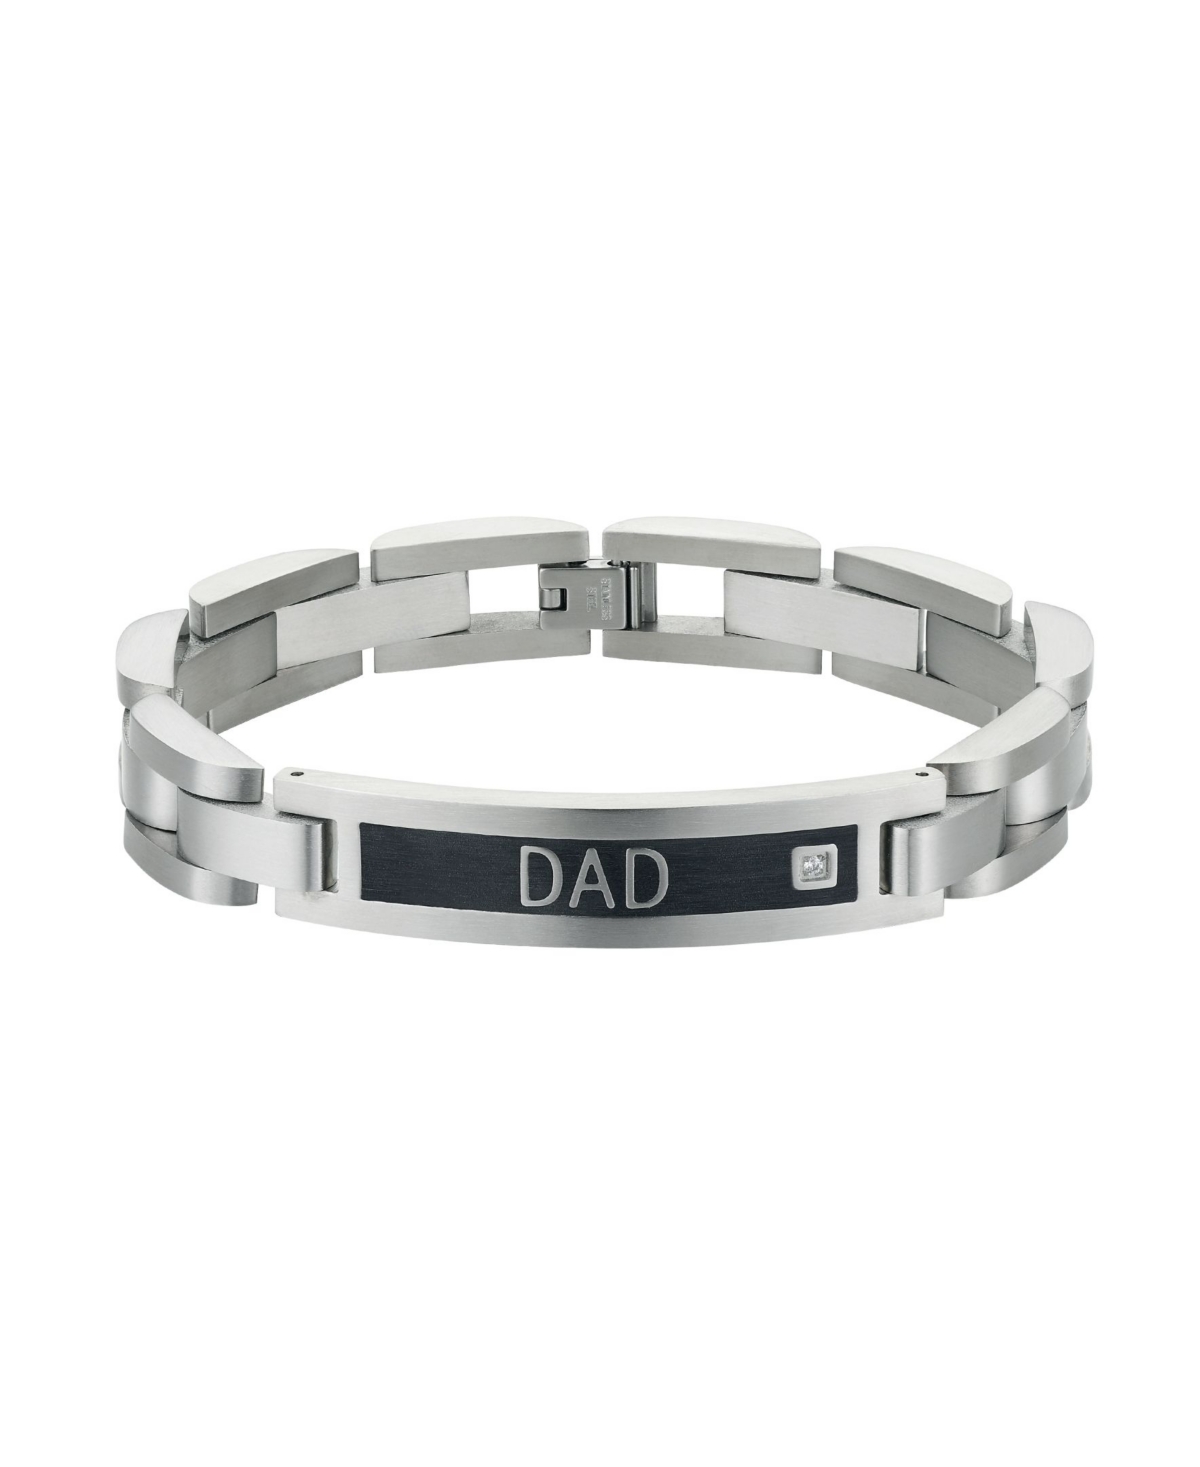 Men's Stainless Steel Dad Link Bracelet - Silver-Tone